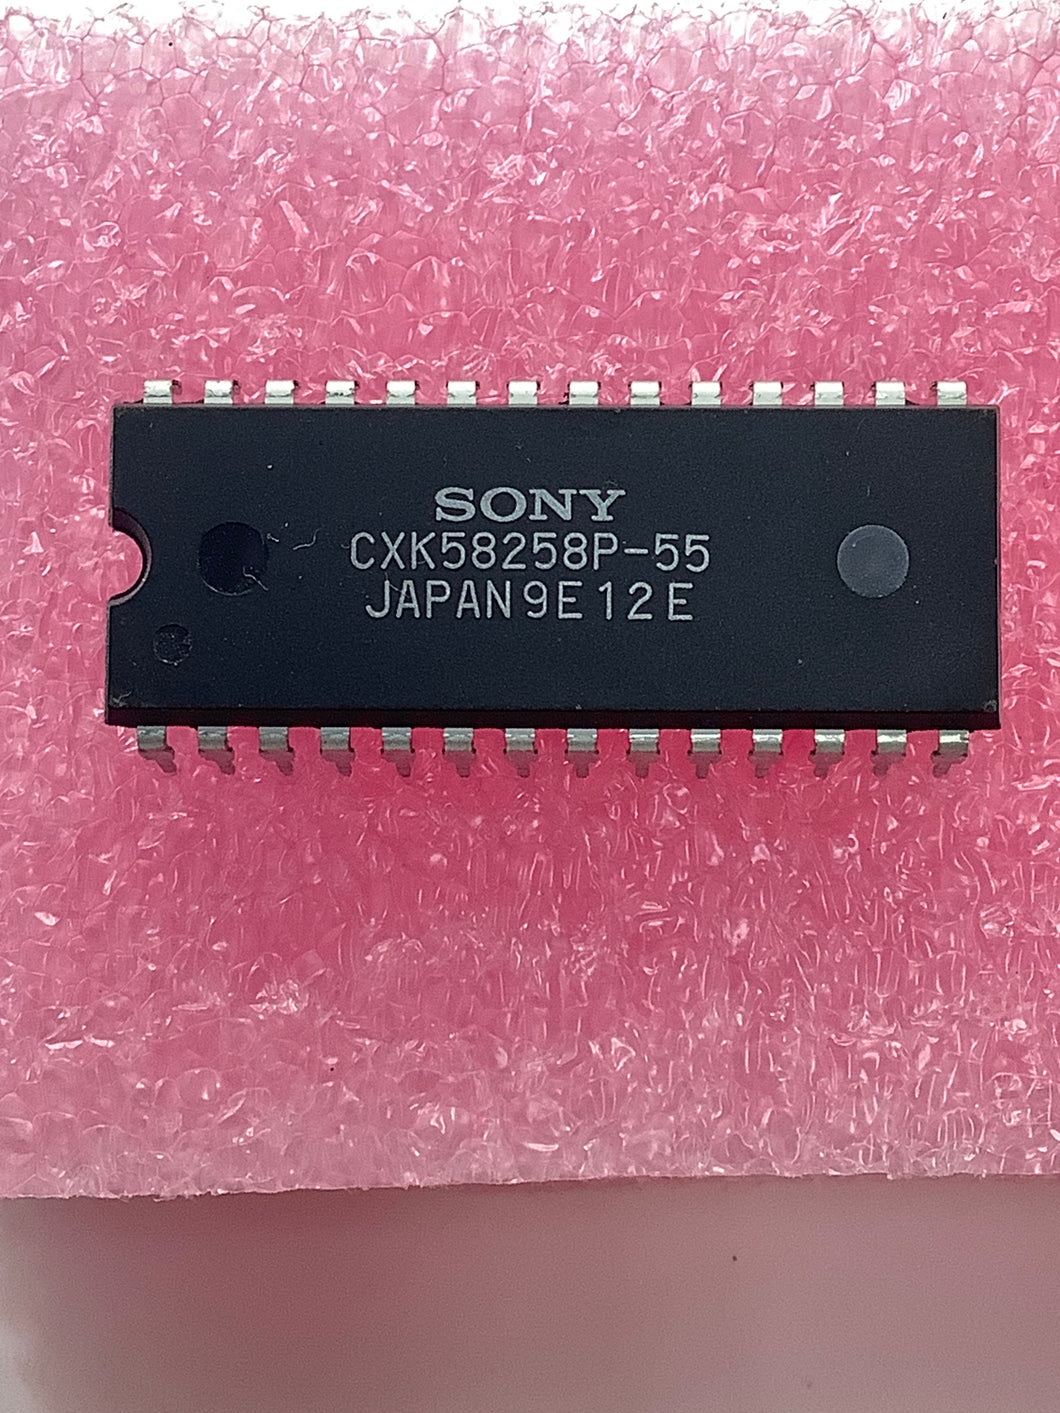 CXK58258P-55 - SONY - HIGH SPEED CMOS STATIC RAM